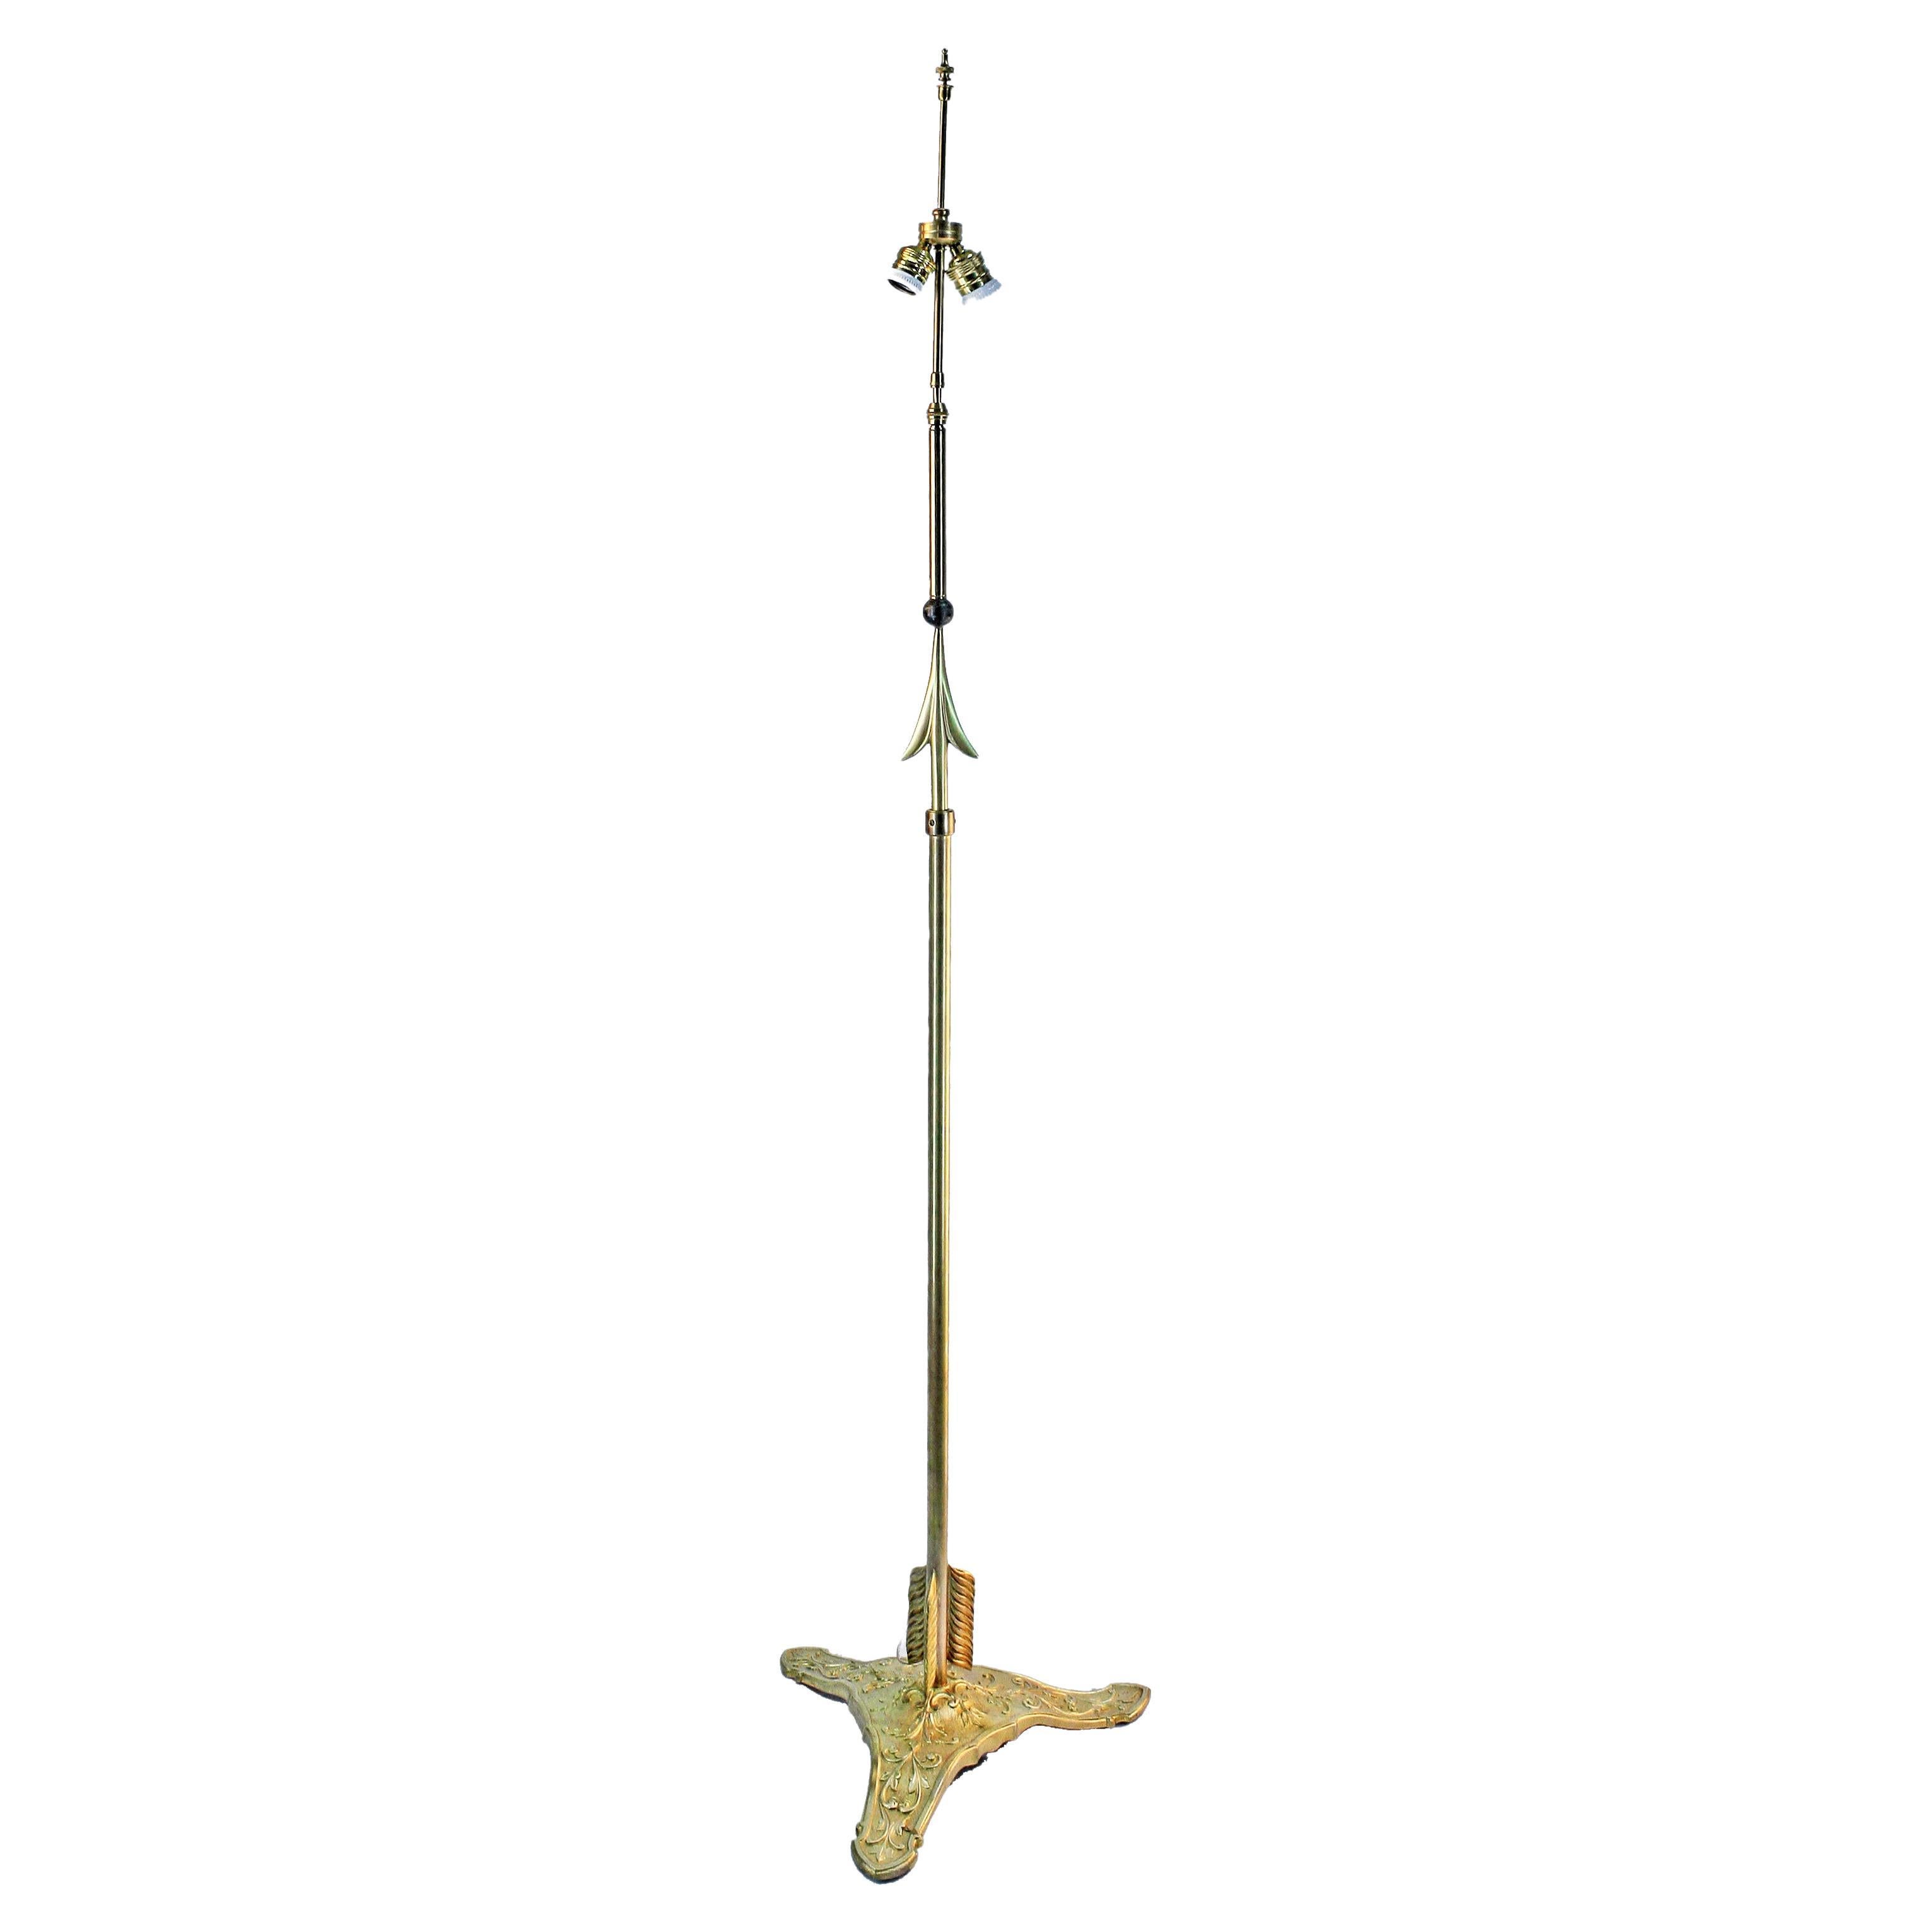 Late 19th C. French Ormolu/Gilt Bronze Arrow-Shaped Floor Lamp by Maison Jansen For Sale